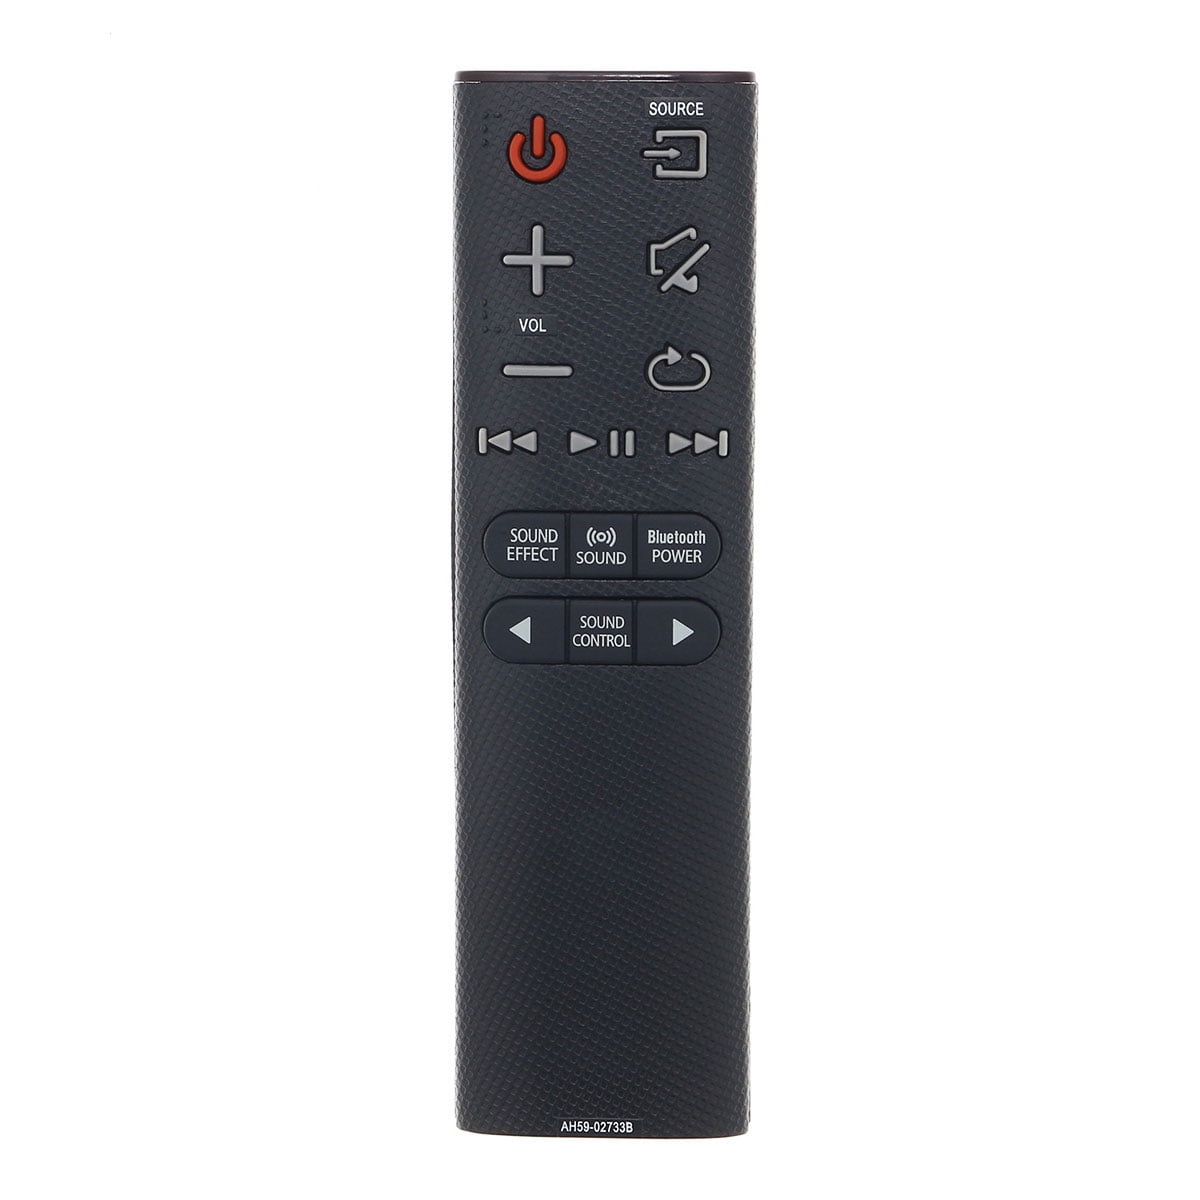 Sound Bar Remote for Samsung HW-KM45/ZA - Walmart.com